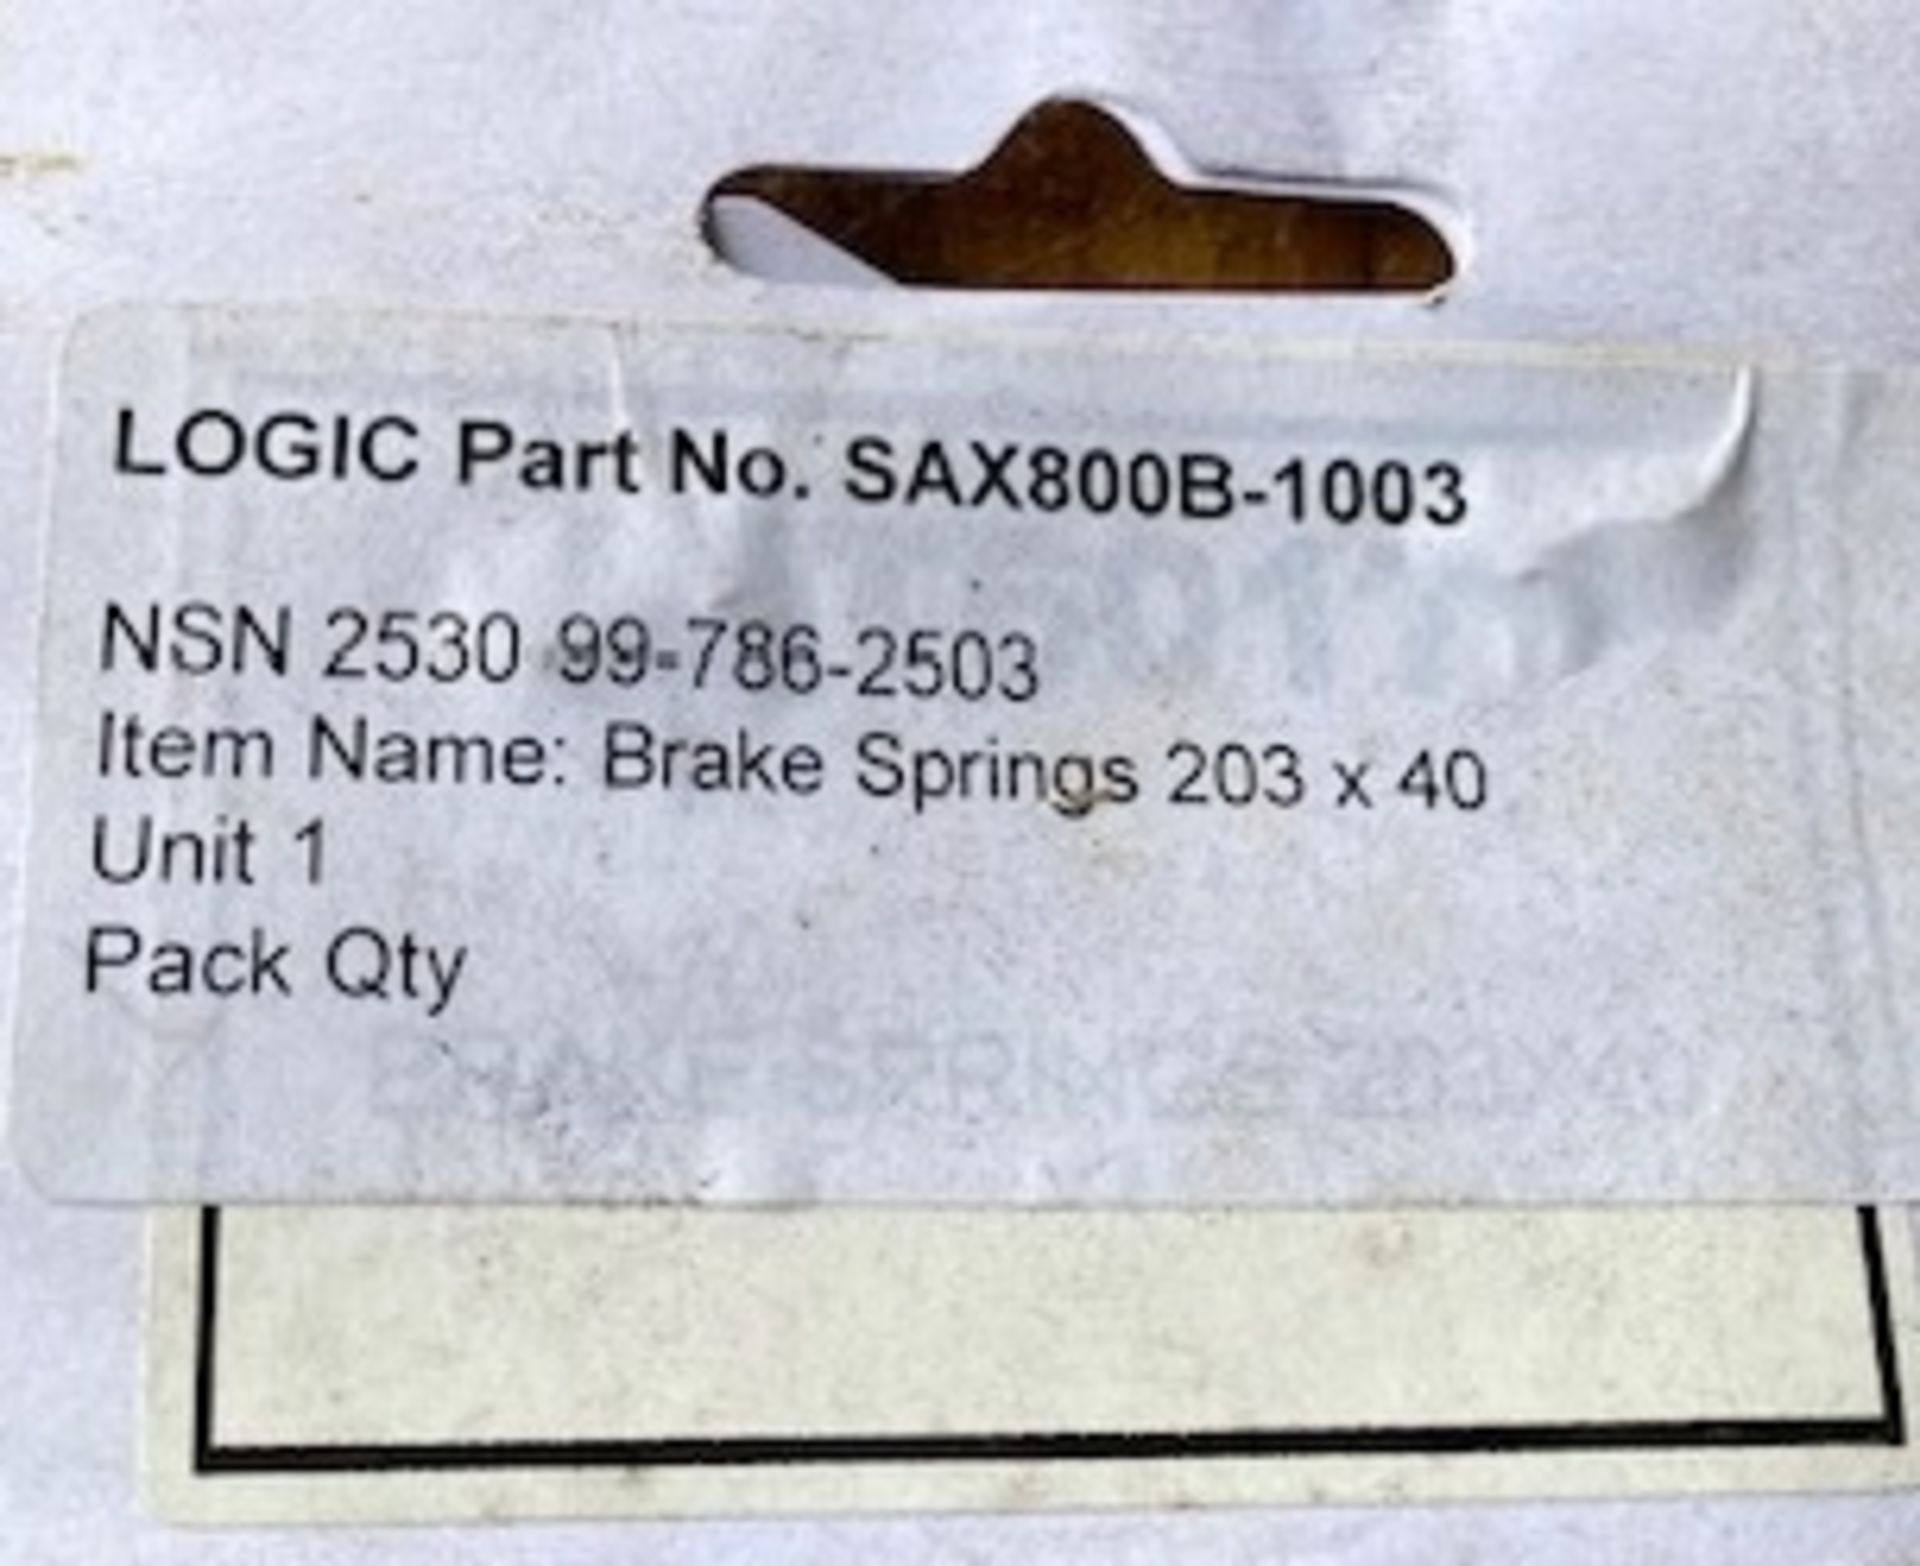 QTY 50 (10 Small Packs x 5) Brake Springs Kit - Image 6 of 6